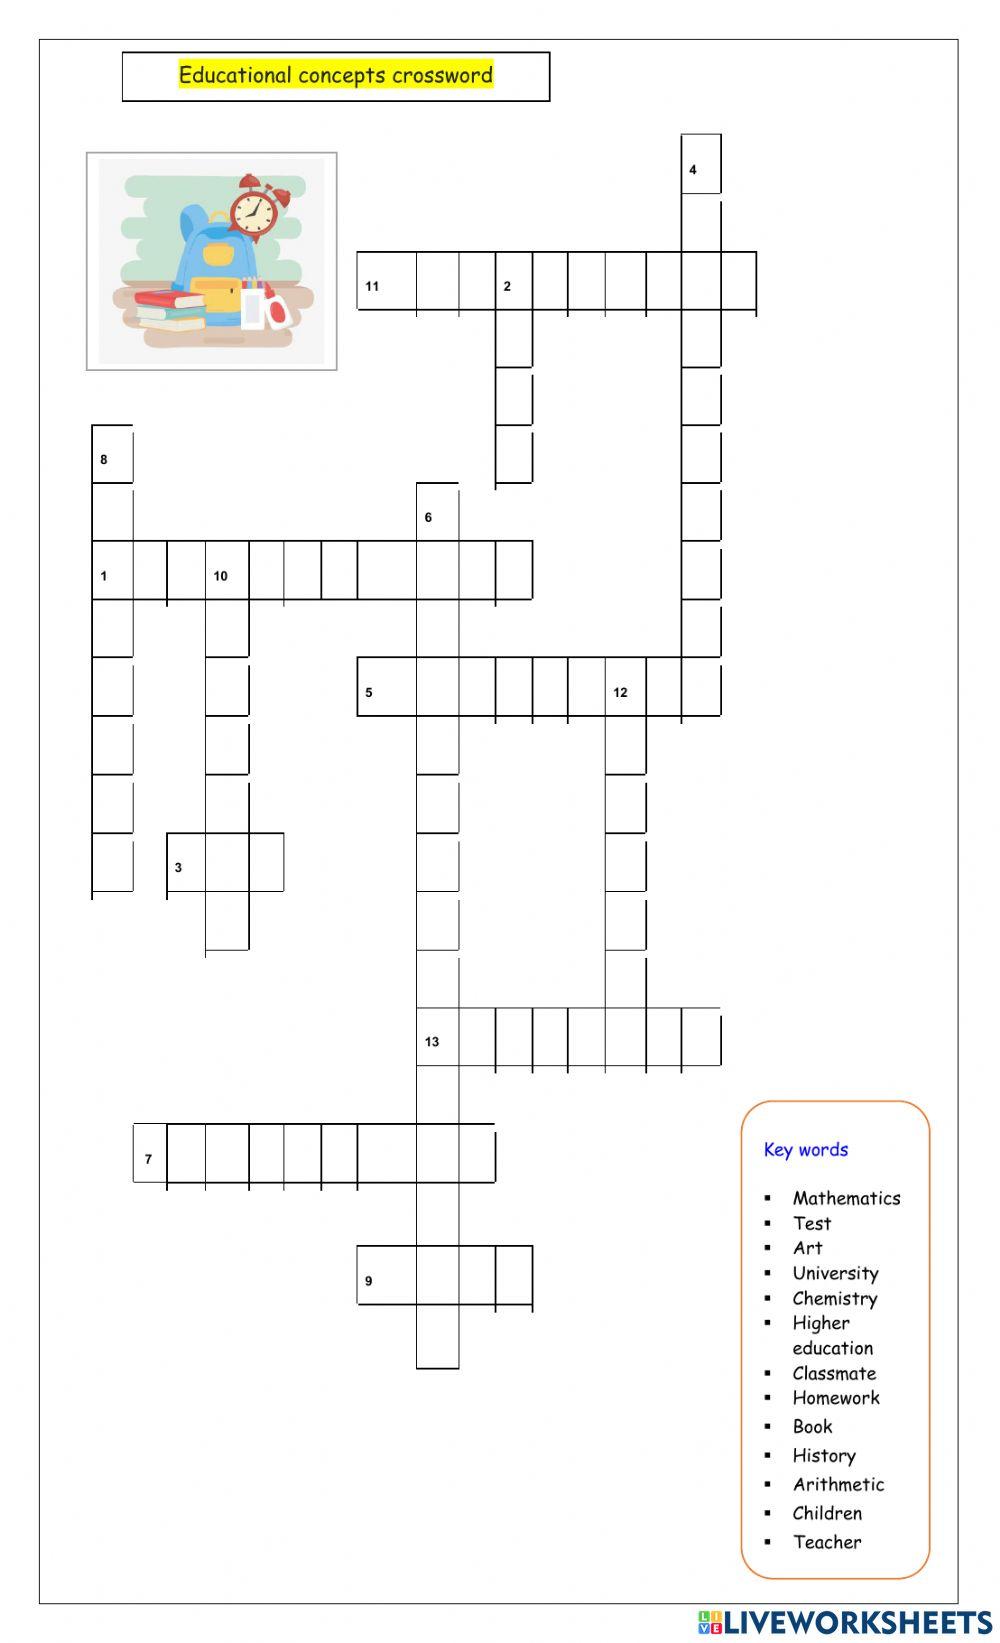 Education crossword